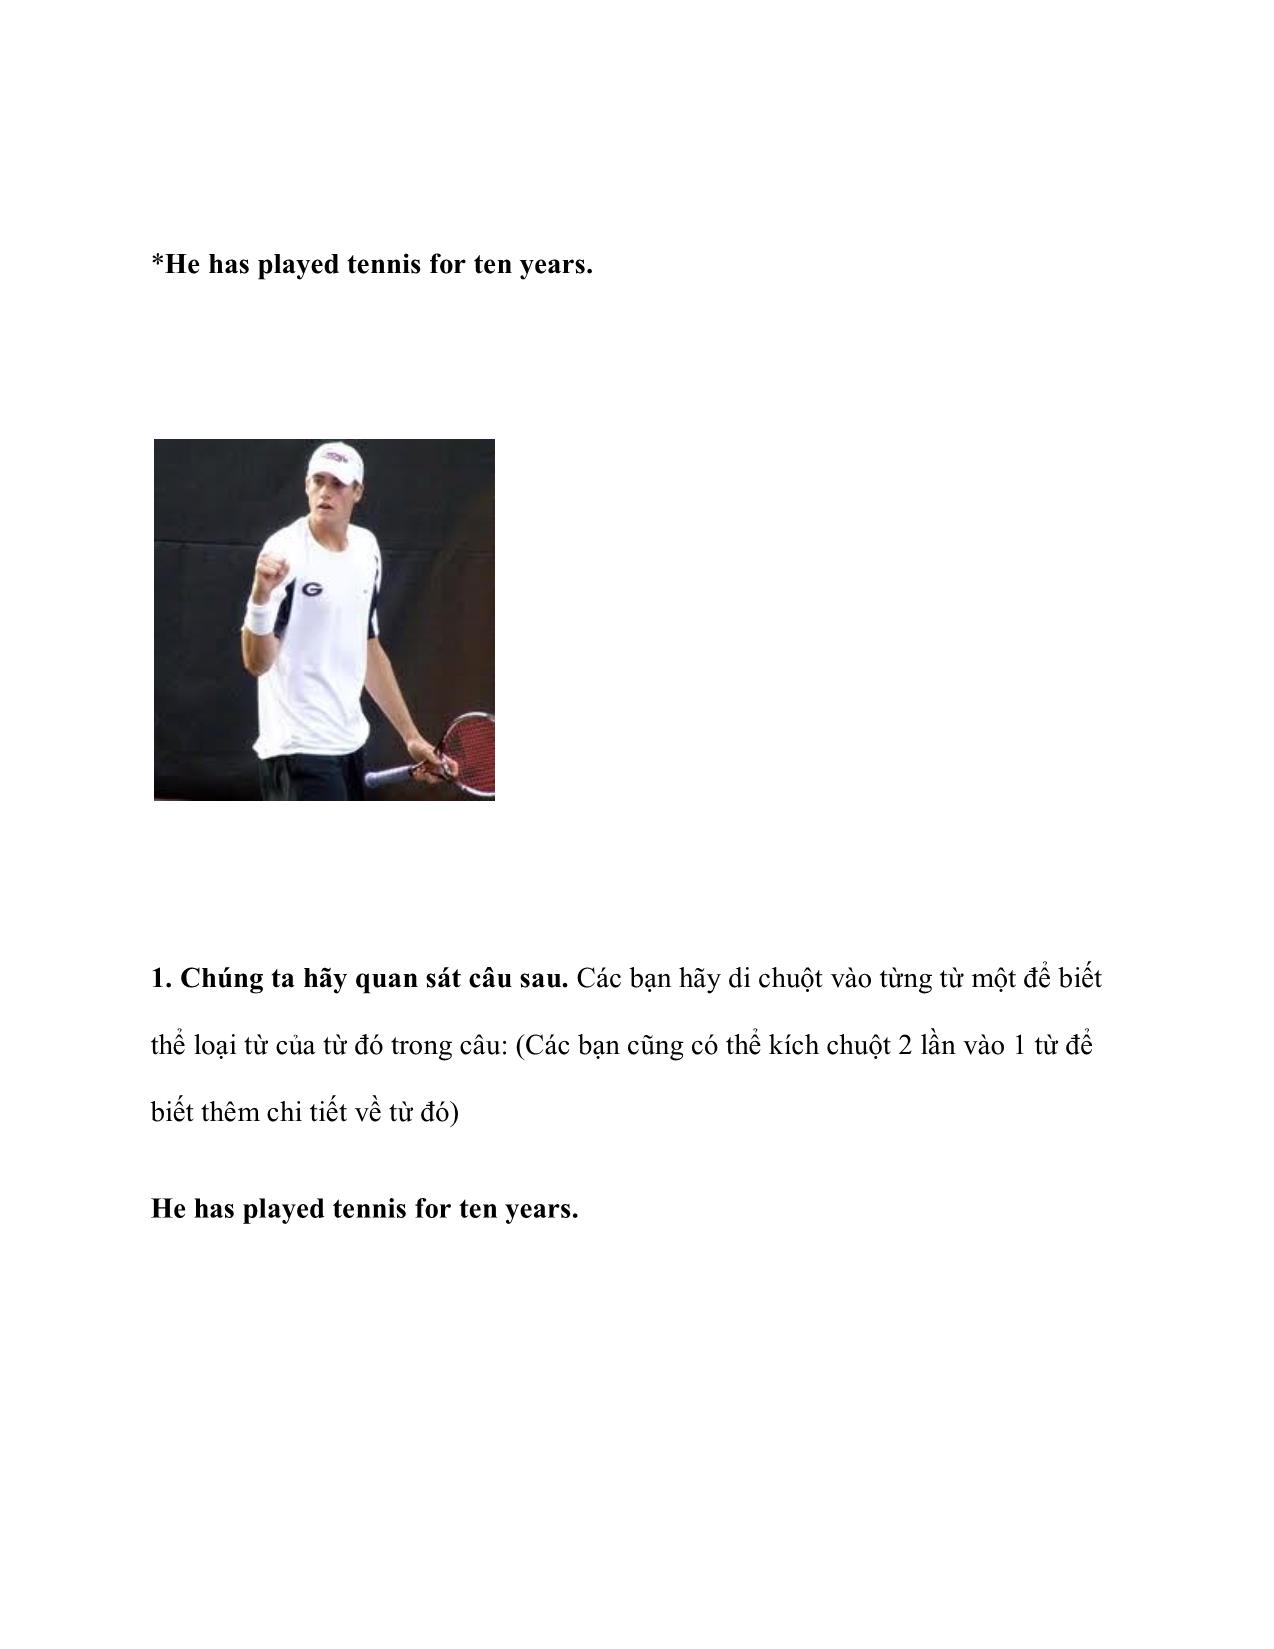 He has played tennis for ten years trang 2